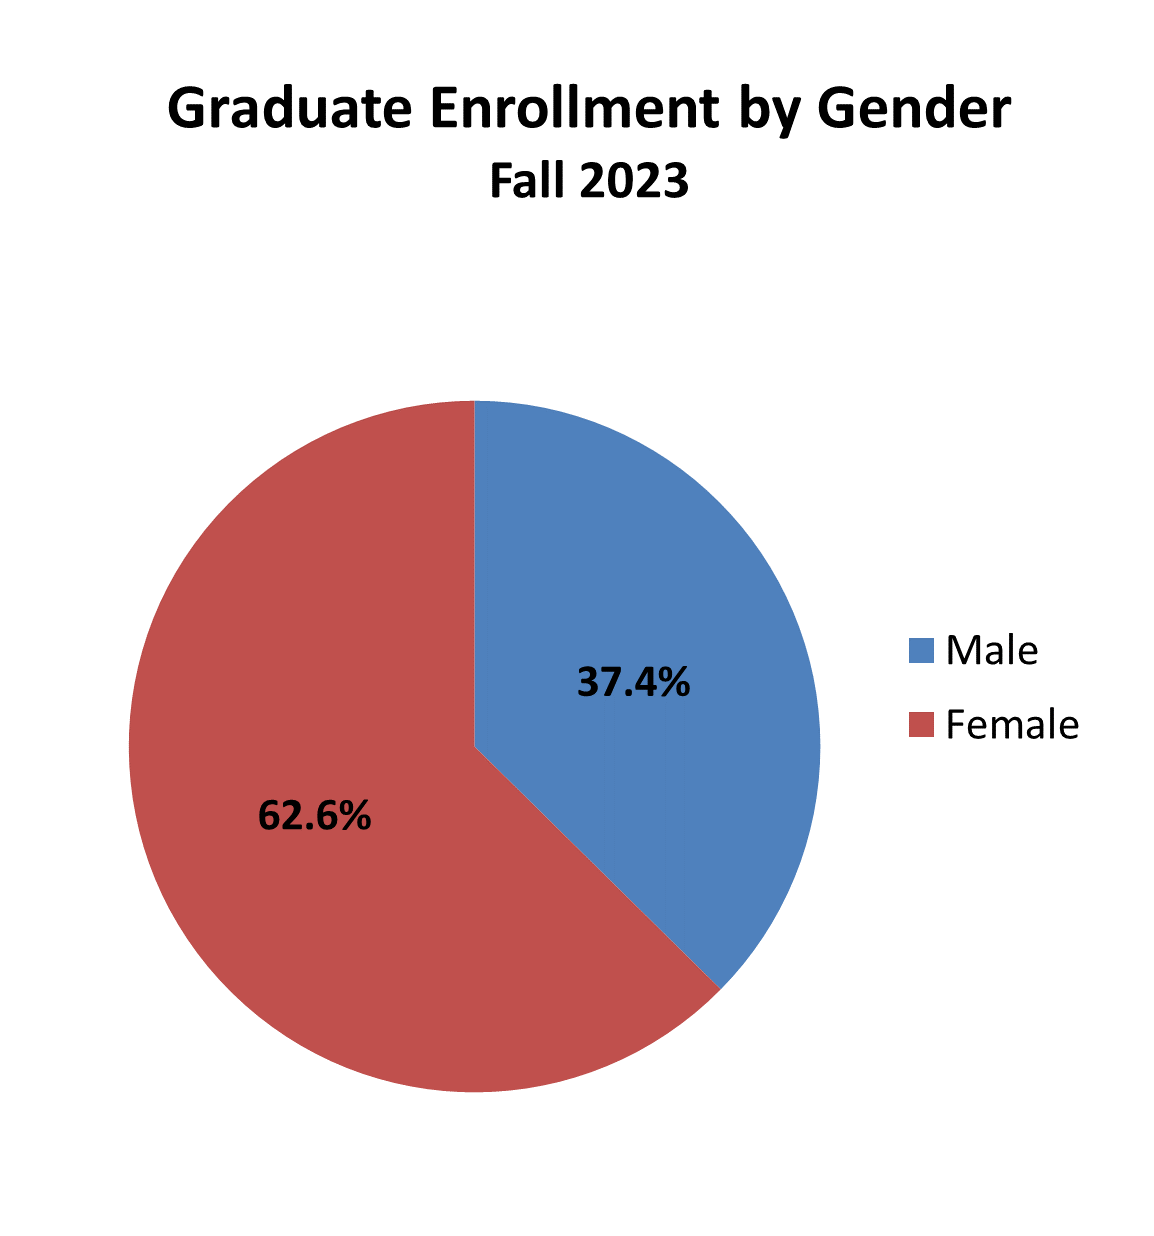 Graduate enrollment by gender pie chart